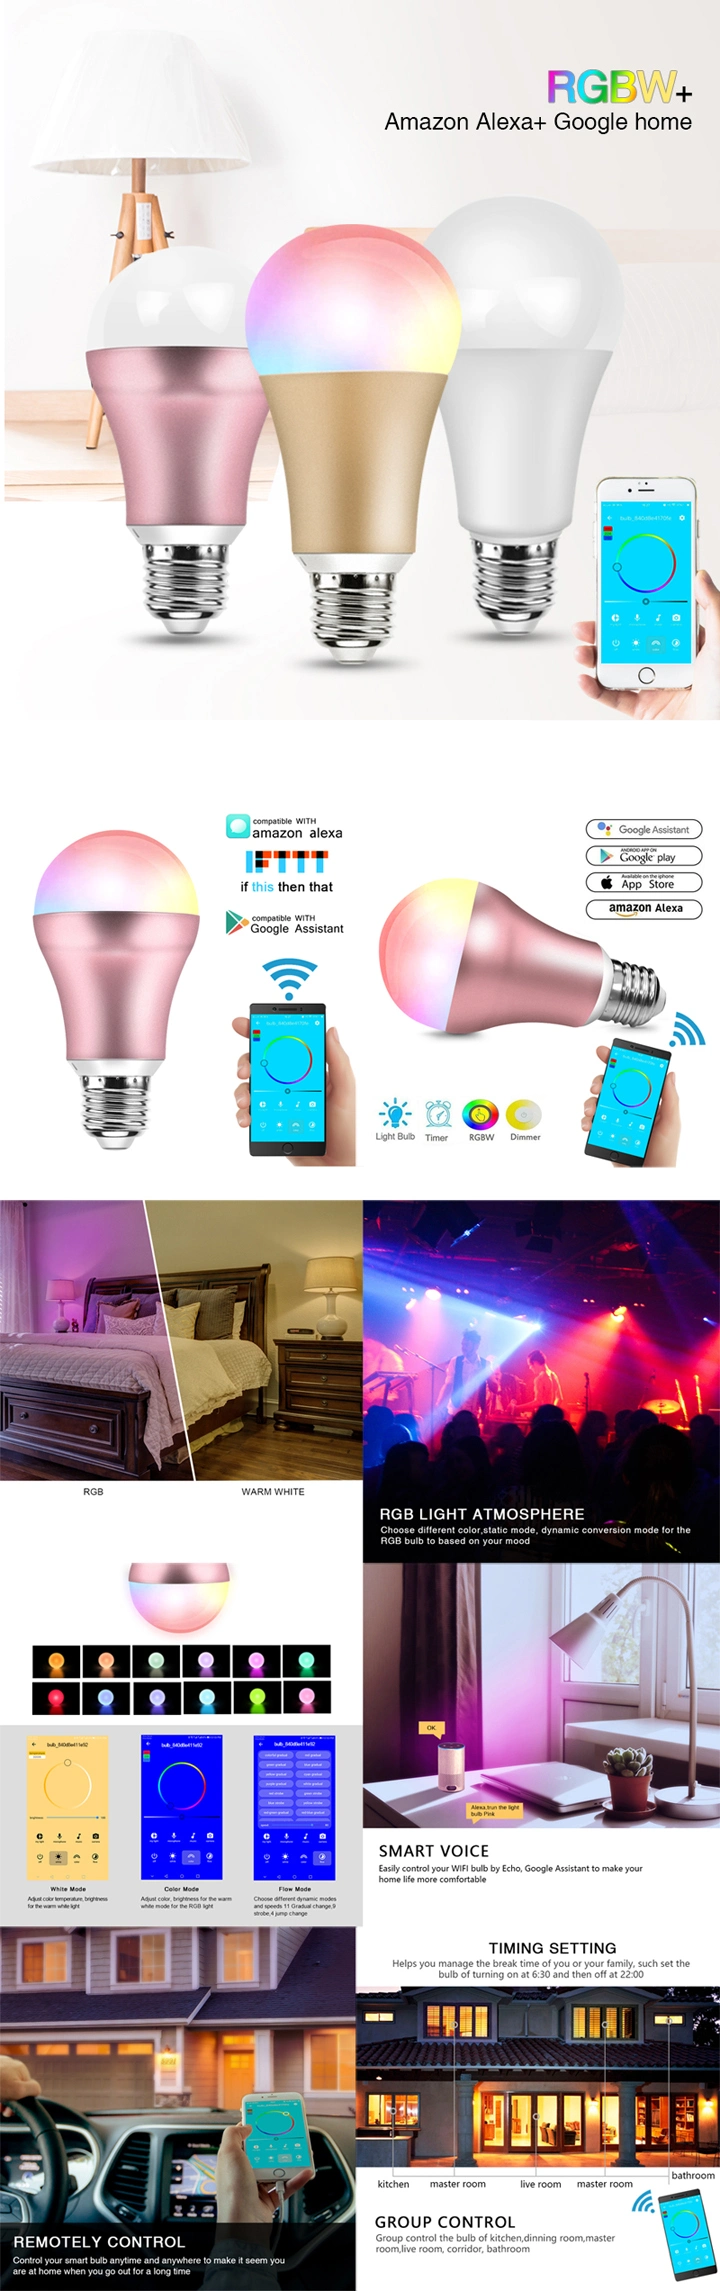 Smart LED Wi-Fi Light Bulb, Multicolored LED Light Bulbs, Works with Amazon Alexa